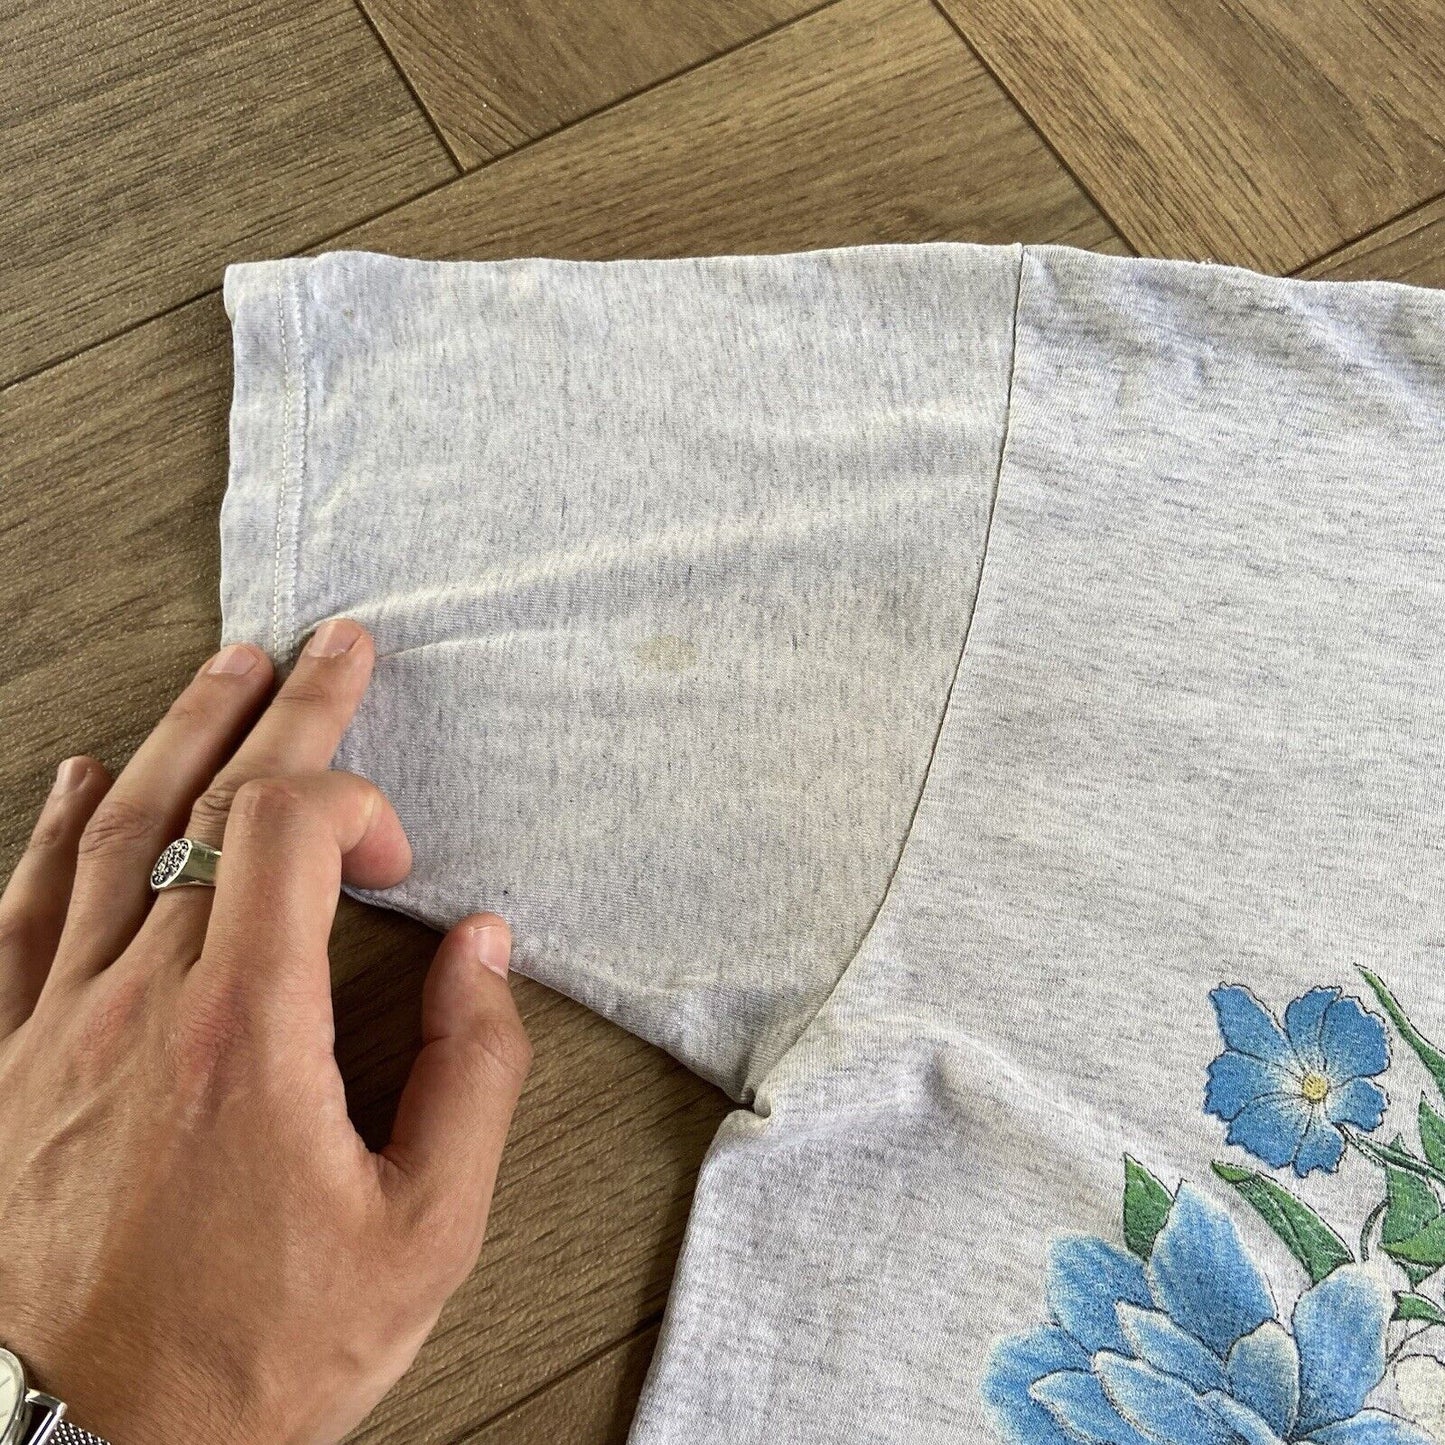 Vintage Cat Single Stitch Graphic T Shirt 90s Size M Grey